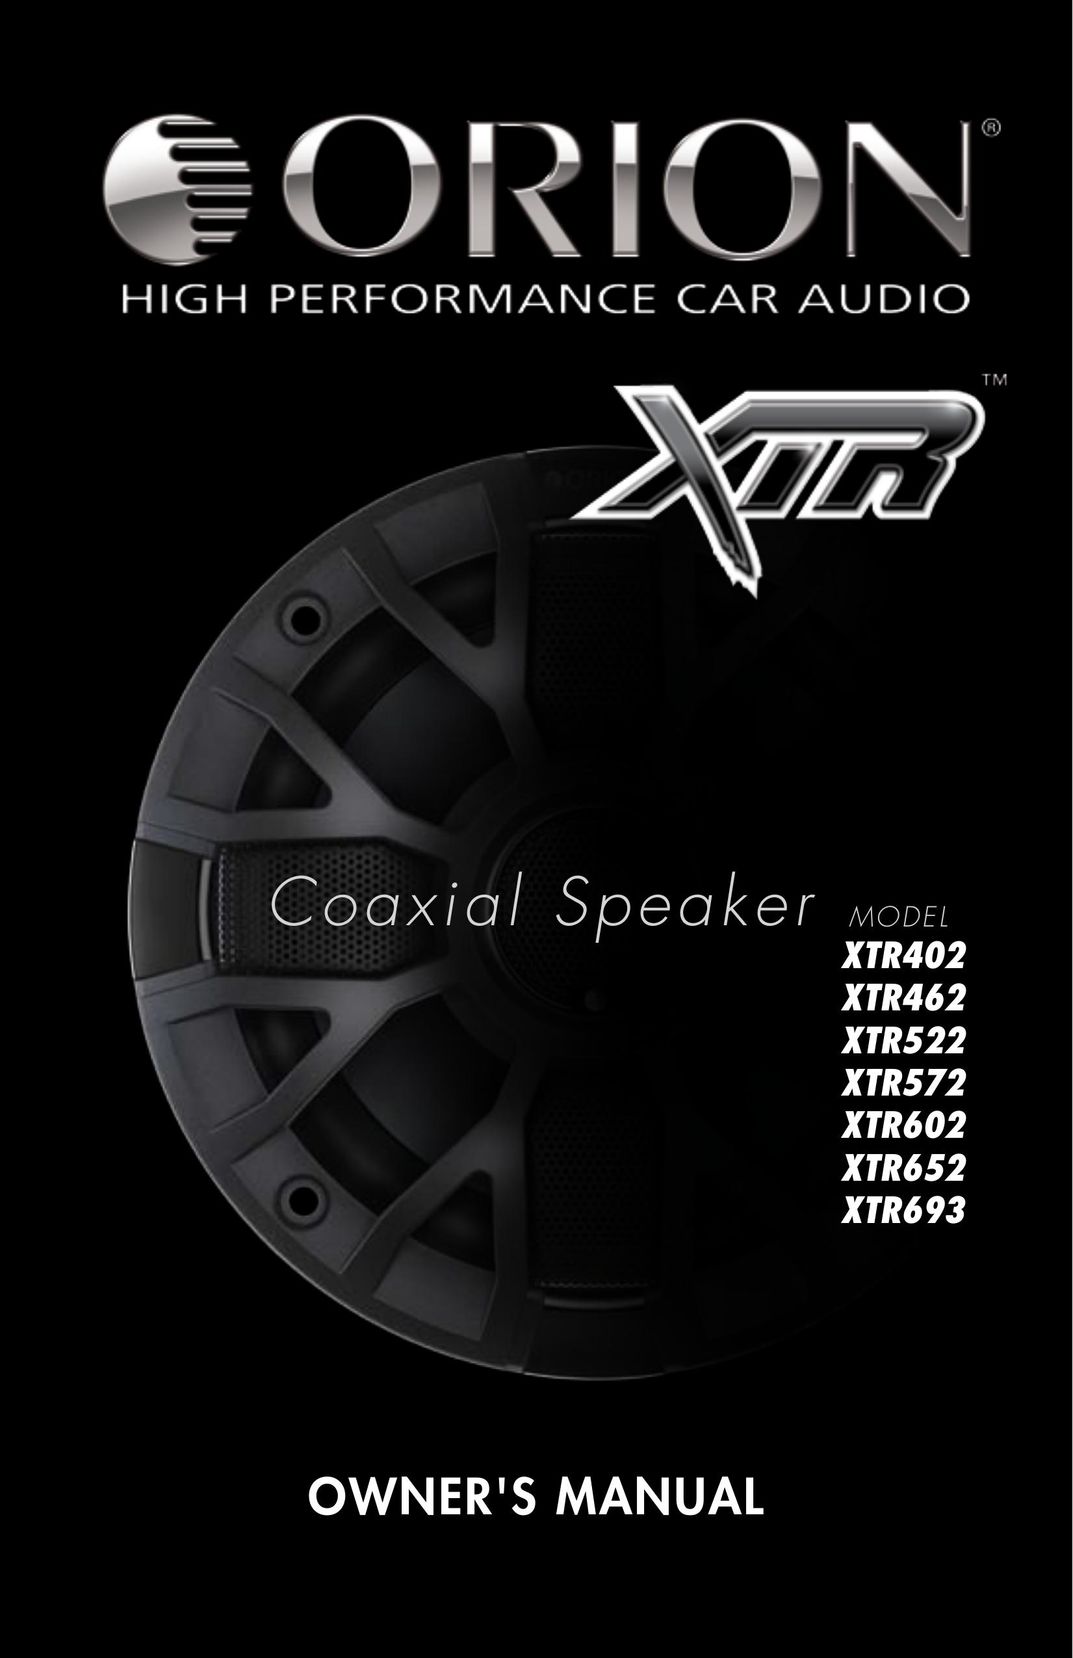 Orion Car Audio XTR652 Car Speaker User Manual